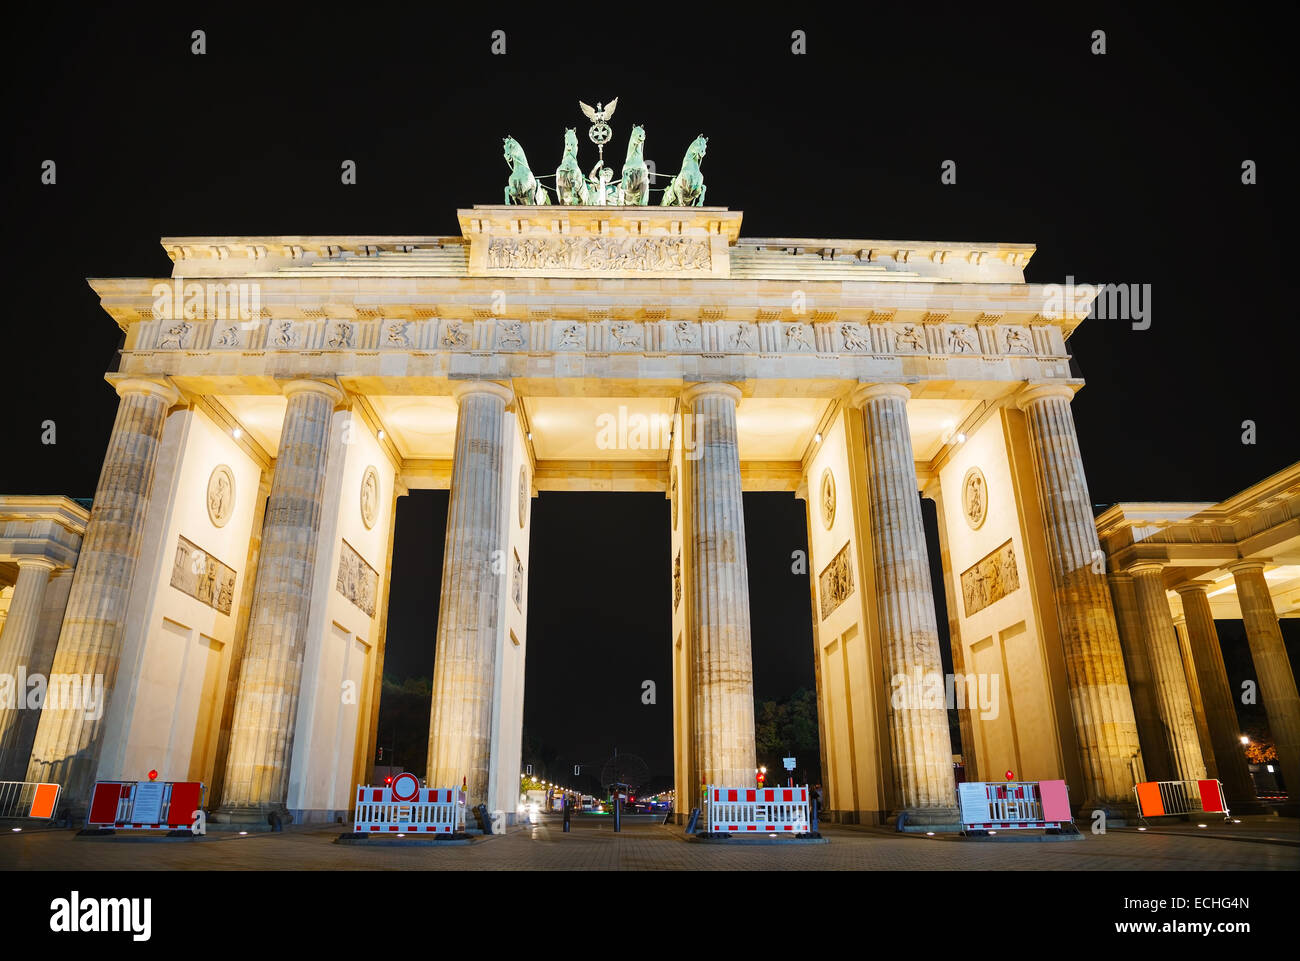 Porte de Brandebourg (Brandenburger Tor) à Berlin, Allemagne la nuit Banque D'Images